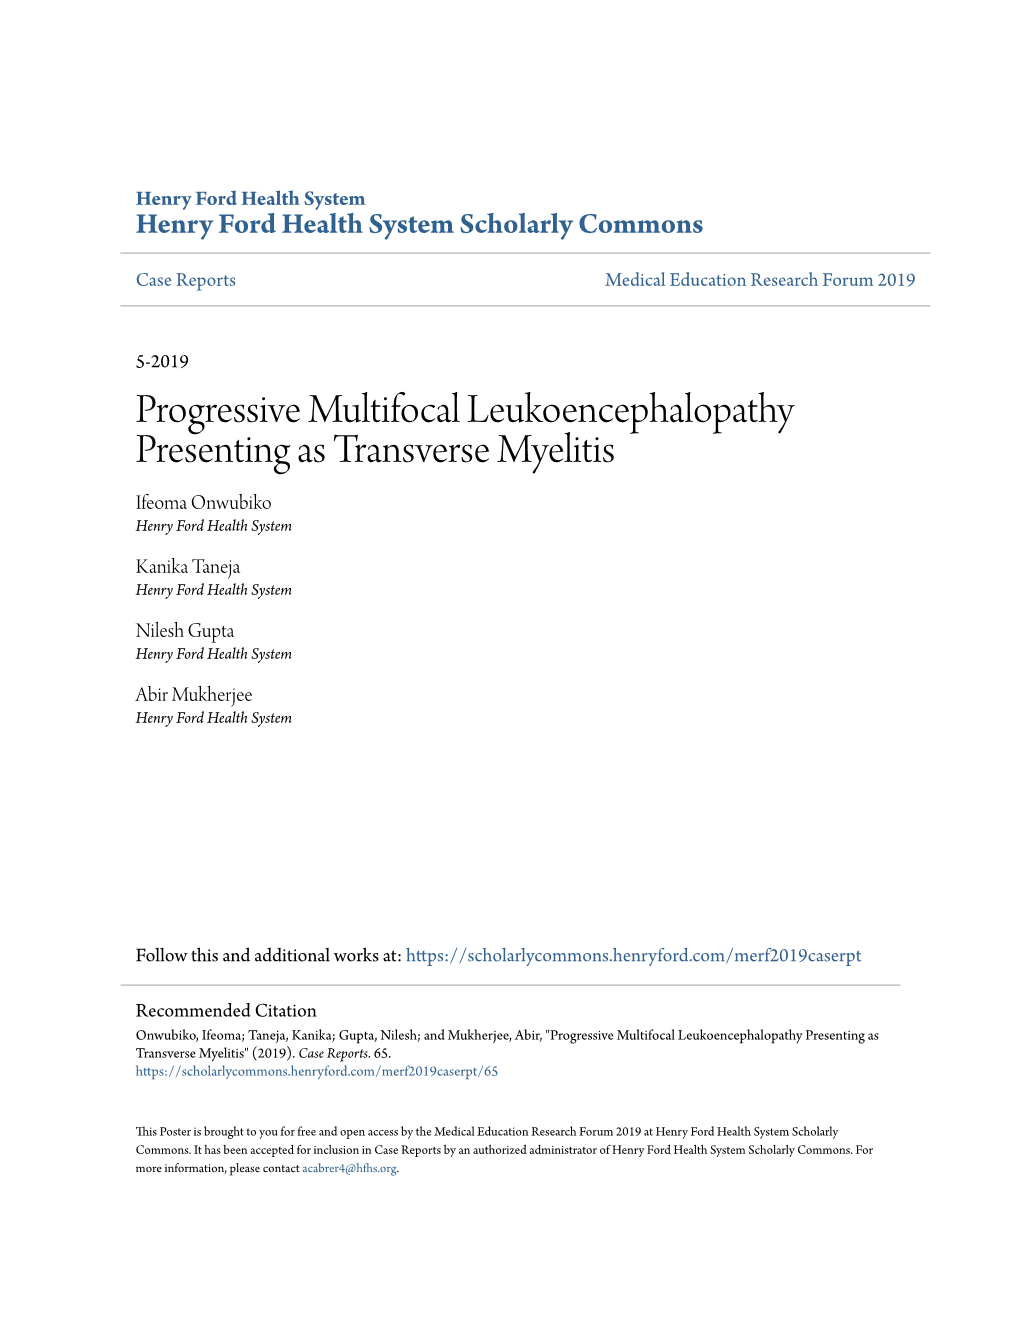 Progressive Multifocal Leukoencephalopathy Presenting As Transverse Myelitis Ifeoma Onwubiko Henry Ford Health System